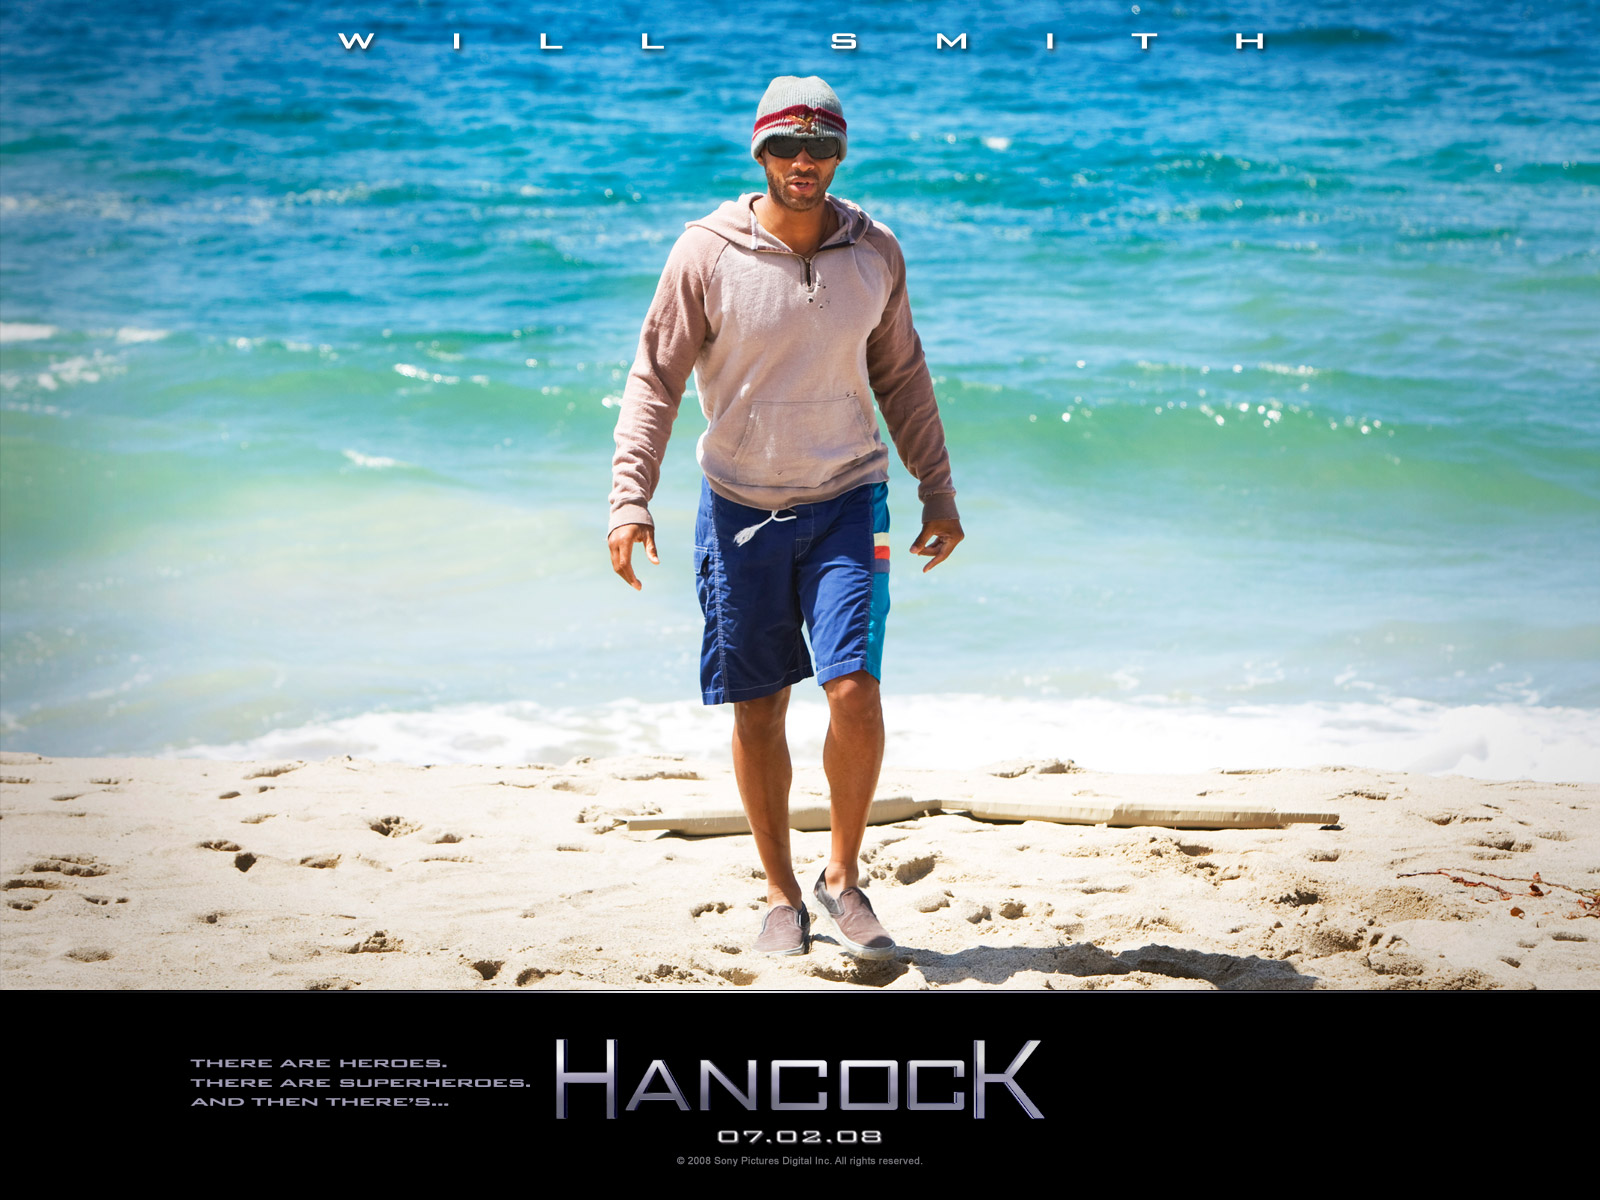 Download full size Hancock wallpaper / Movies / 1600x1200